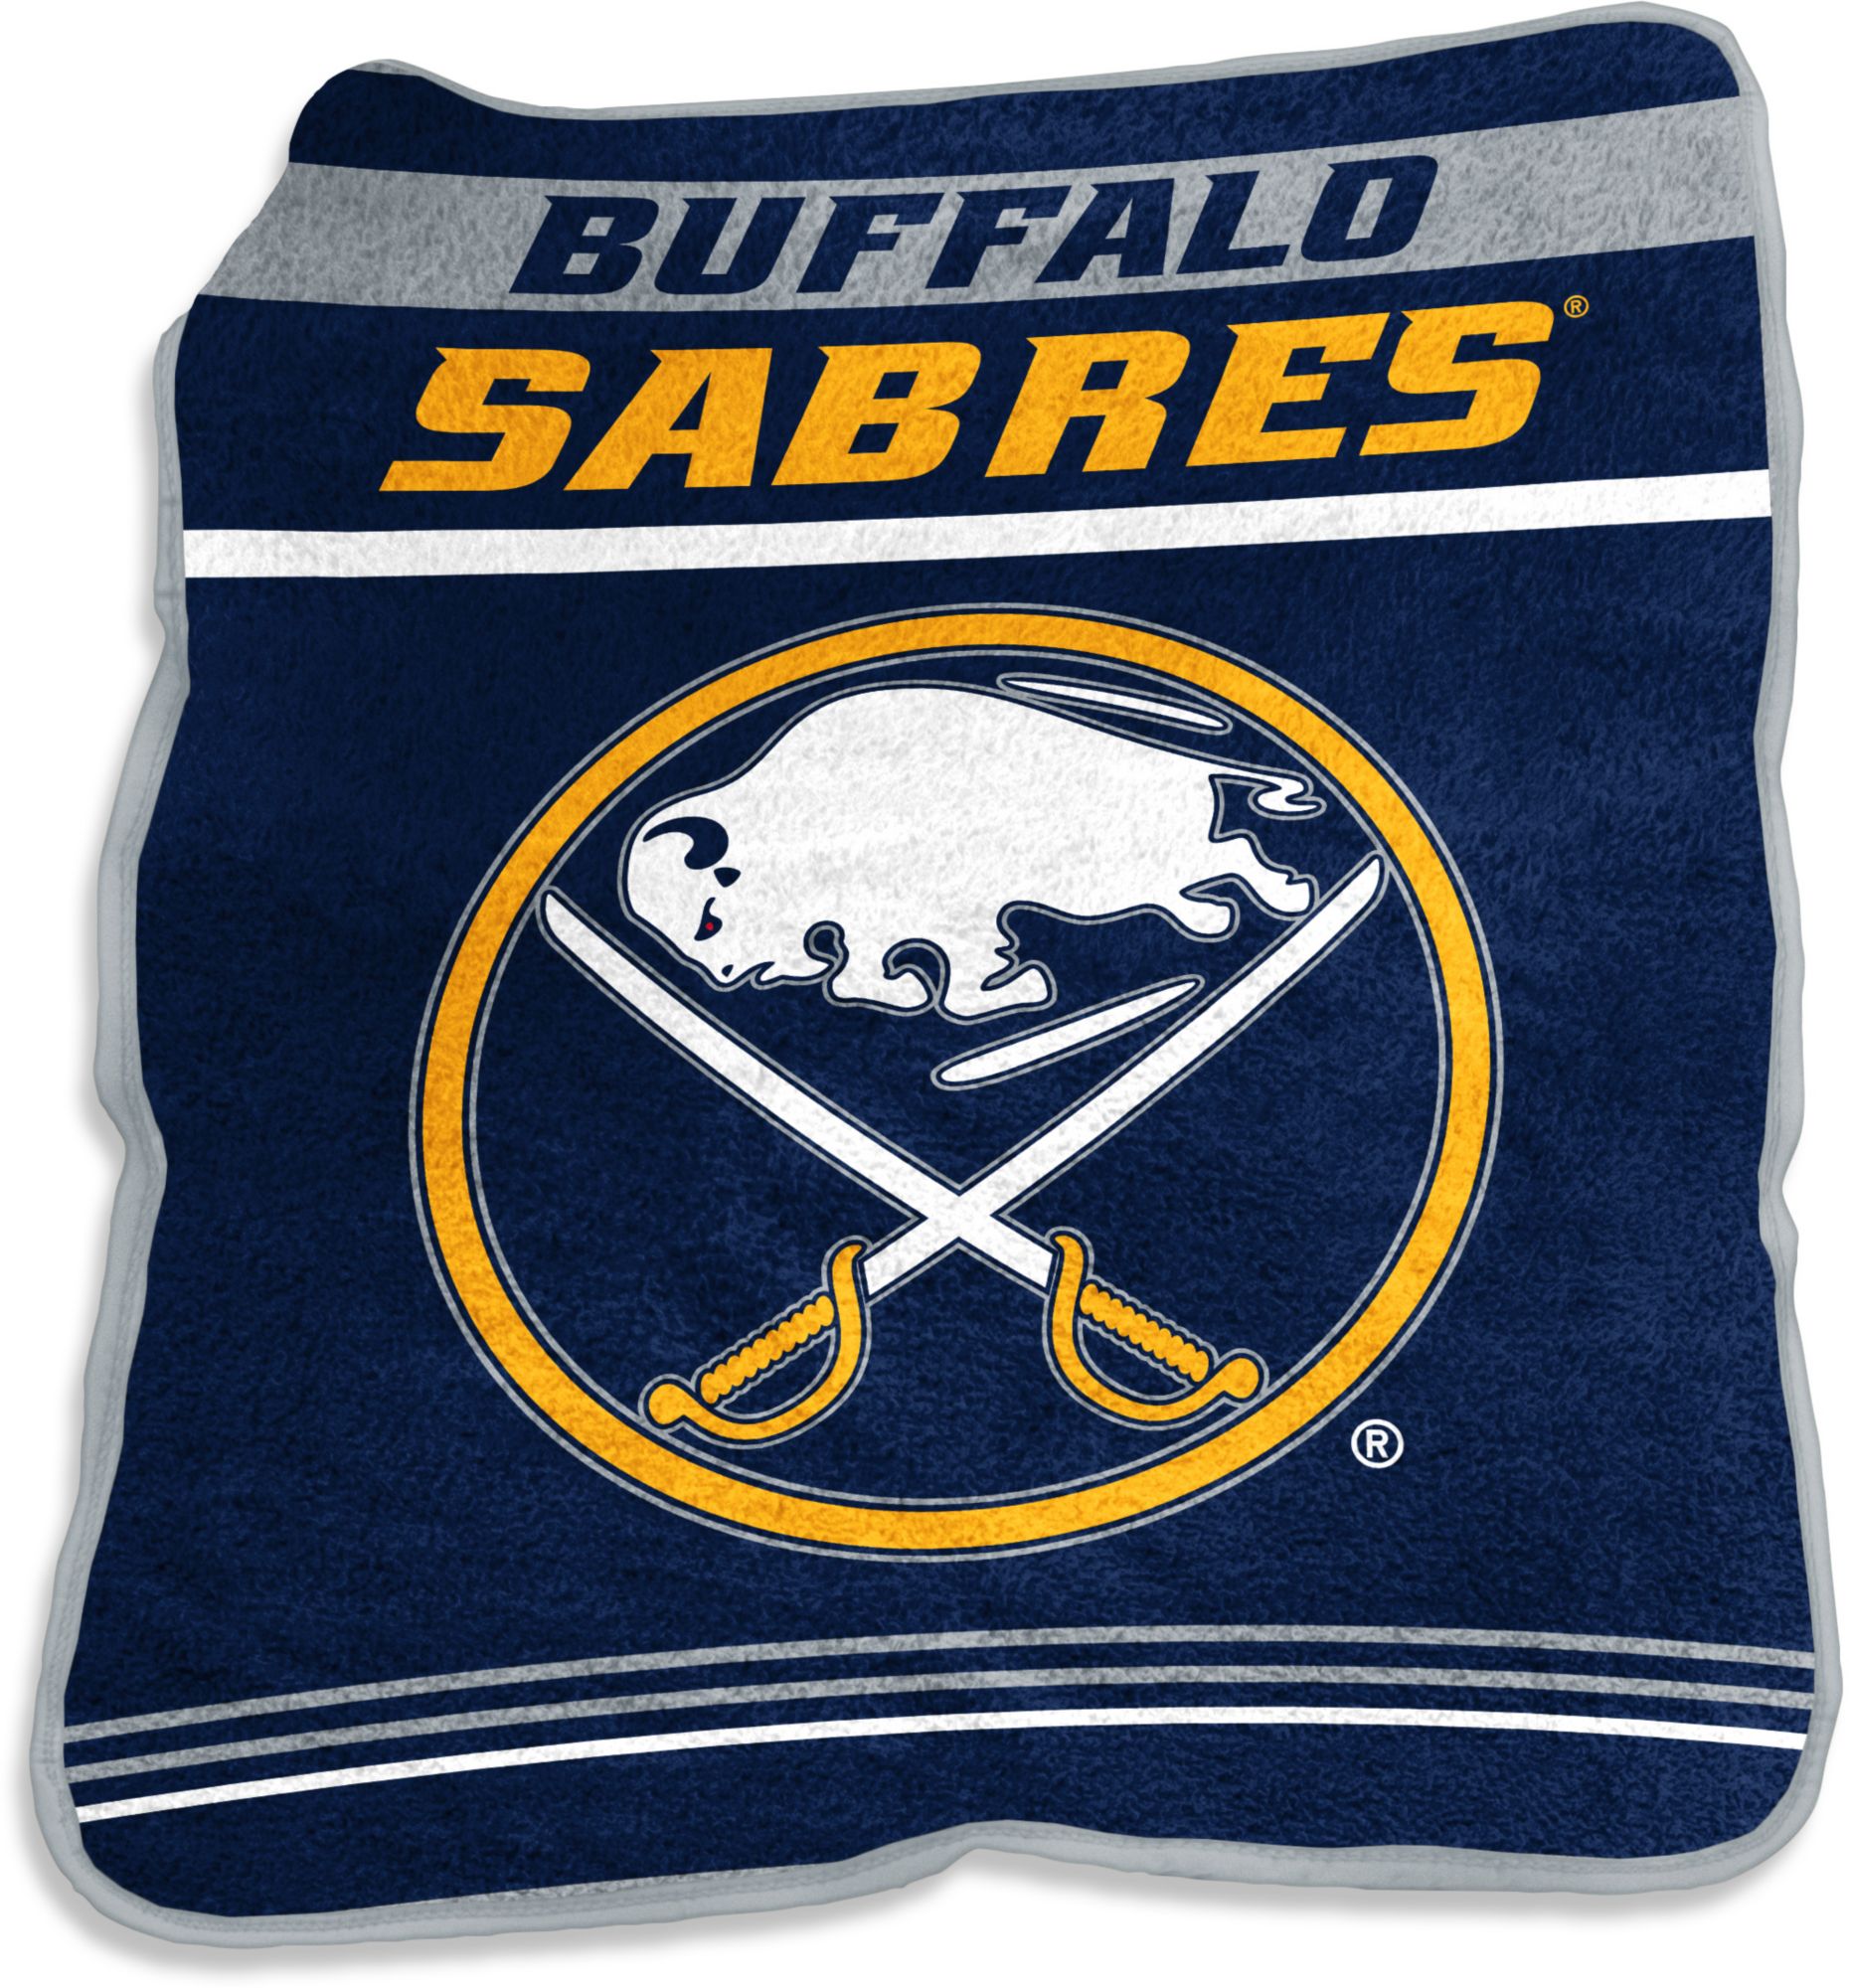 Buffalo Sabres Game Day Throw Blanket 